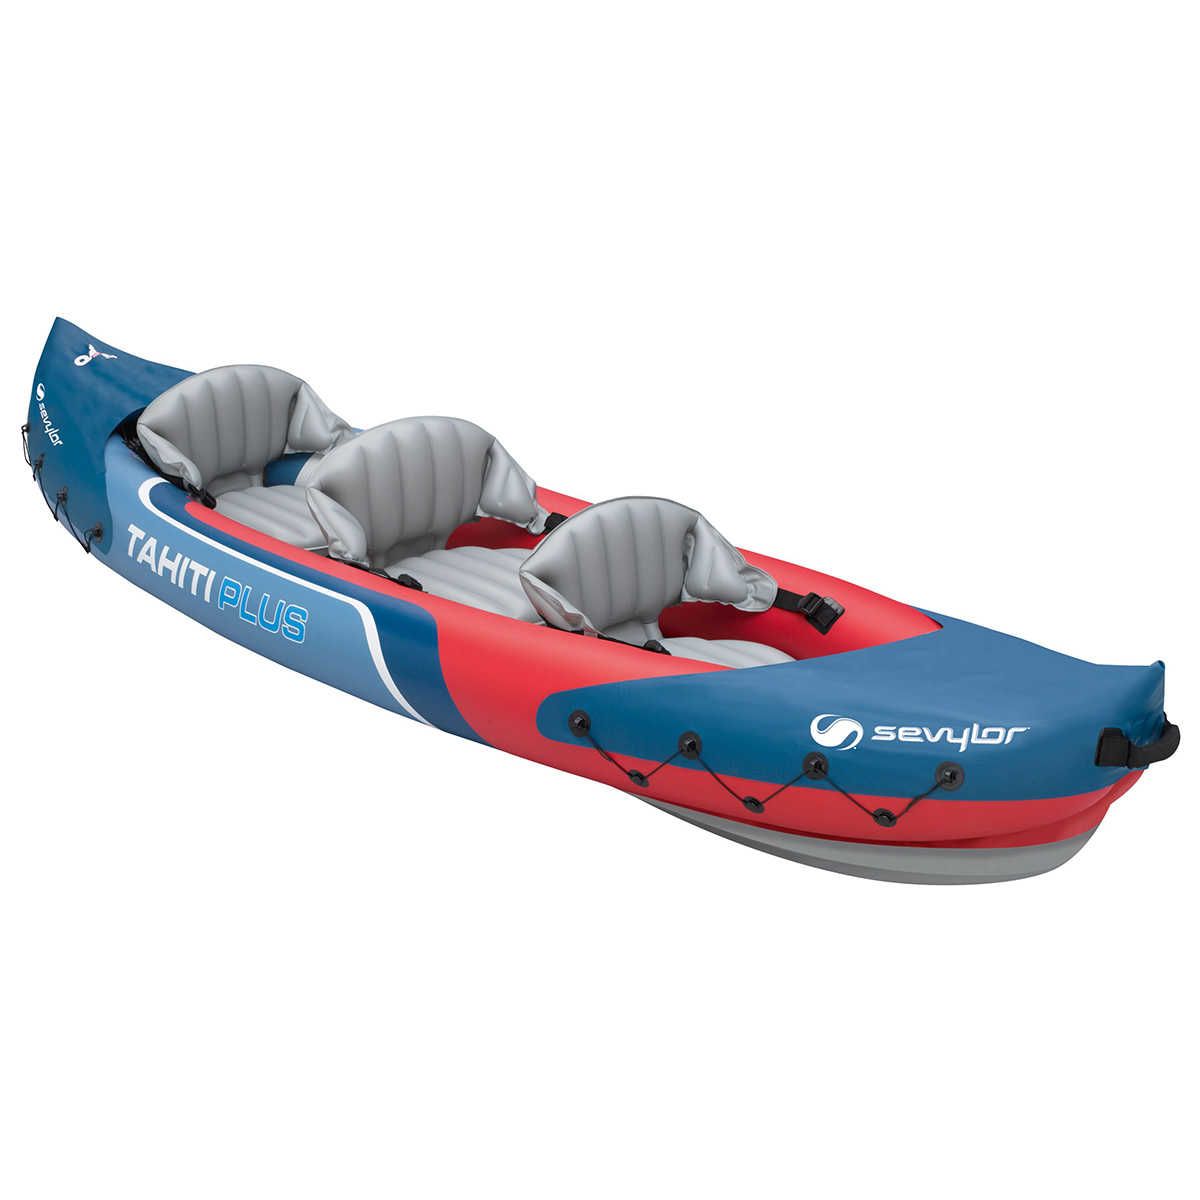 Kayak Gonflable Tahiti Plus - 2 adultes + 1 enfant - Rouge / Bleu - 1